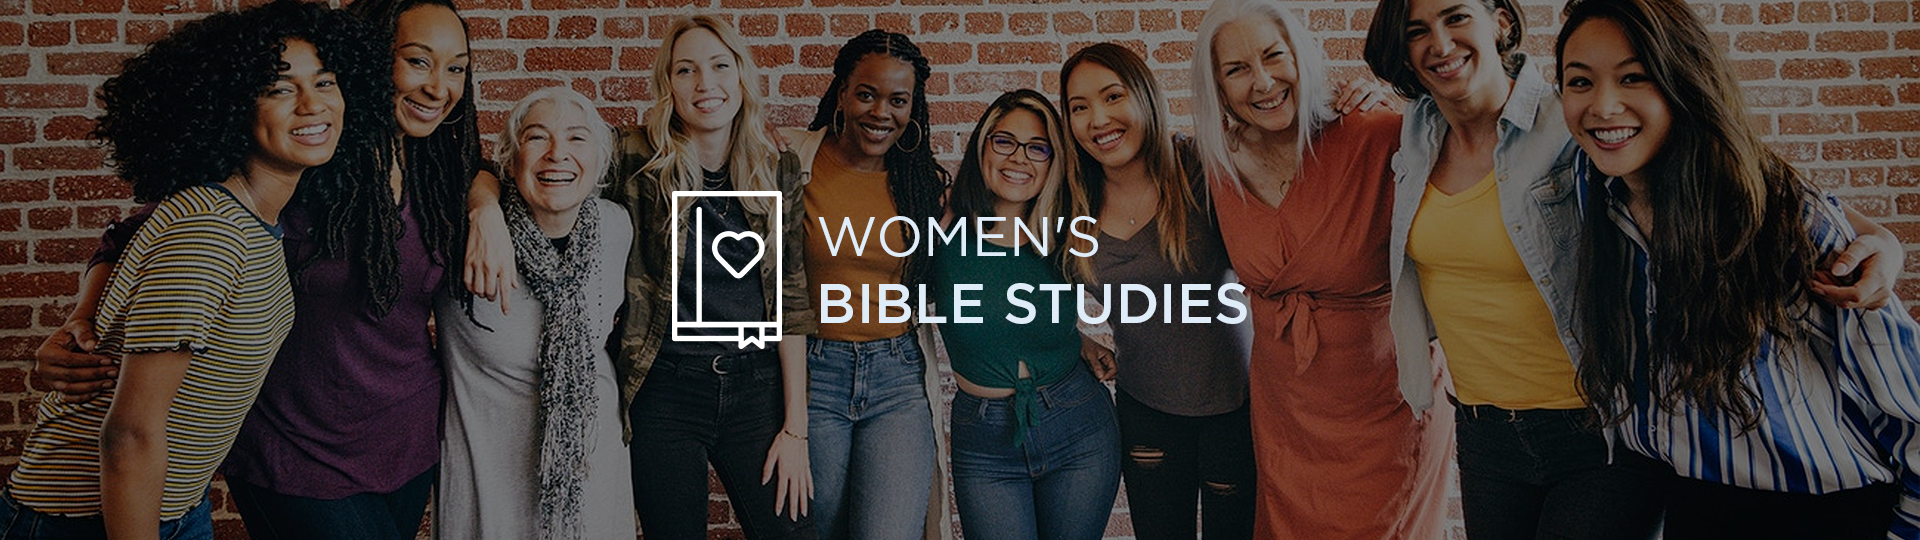 CSC_Womens_Bible_Studies_Slide1920x540.jpg